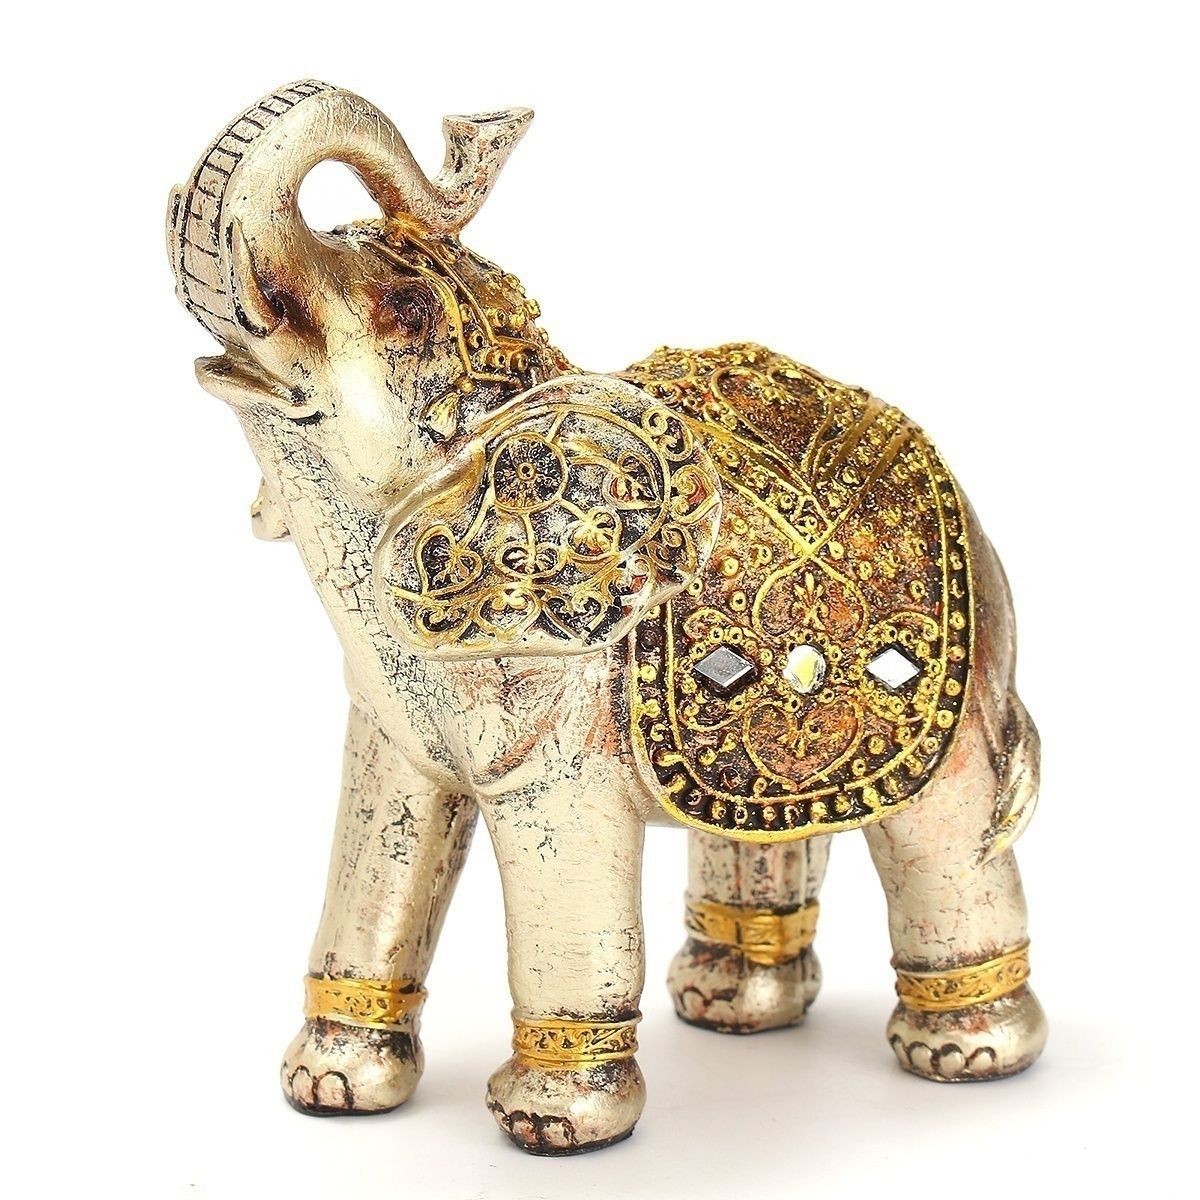 7Pcs-Feng-Shui-Golden-Elephant-Statue-Lucky-Wealth-Figurine-Gift-Home-Decor-1690816